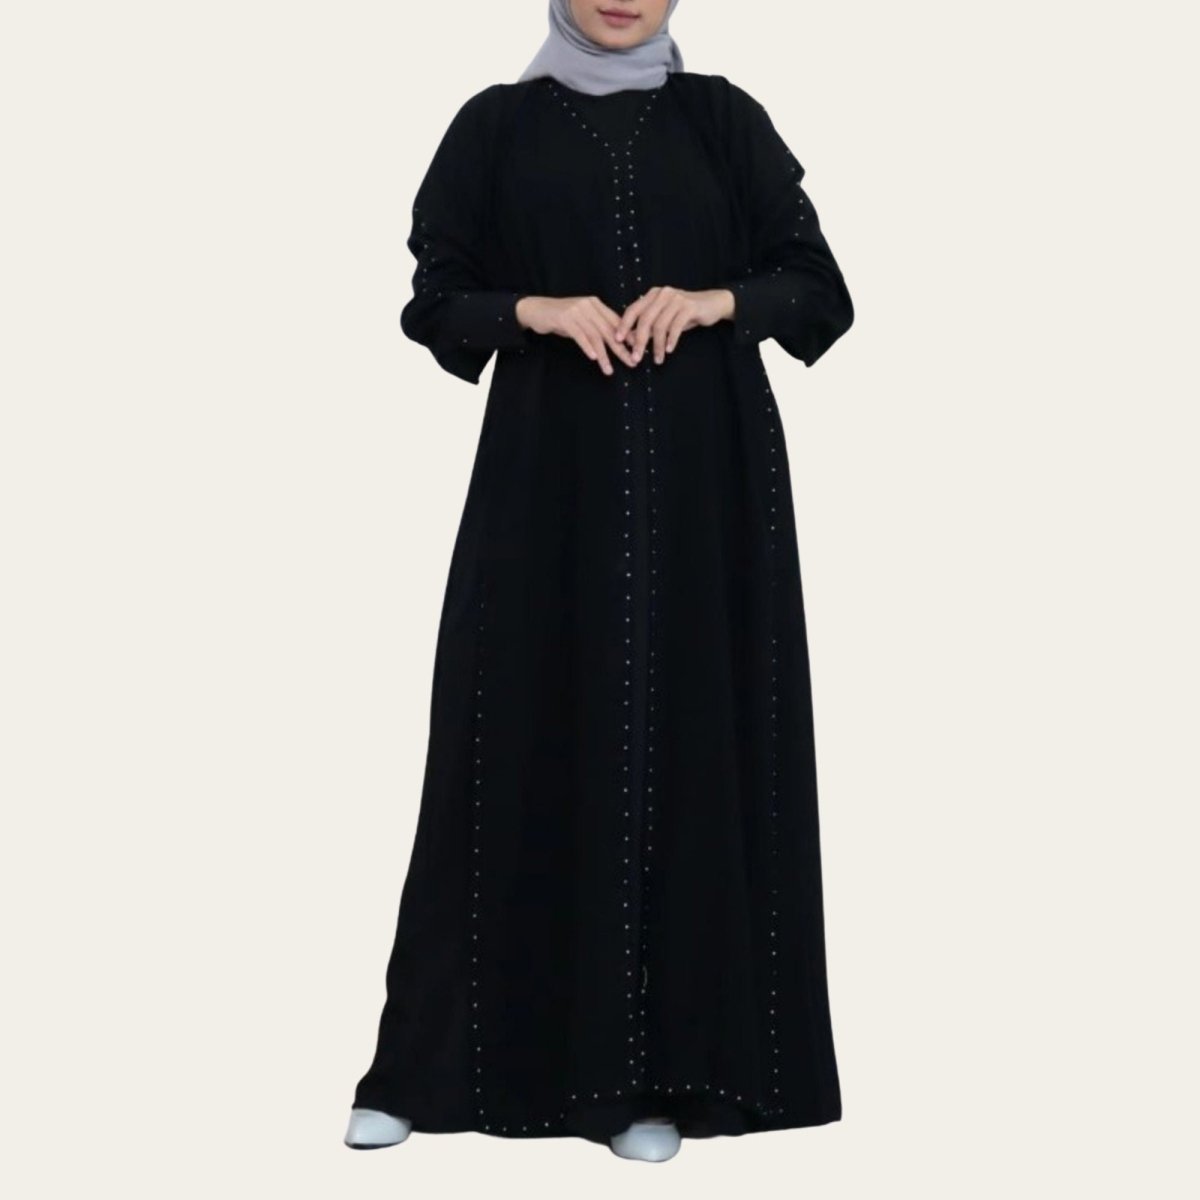 Black Dress Abaya Saudi for Women Muslim